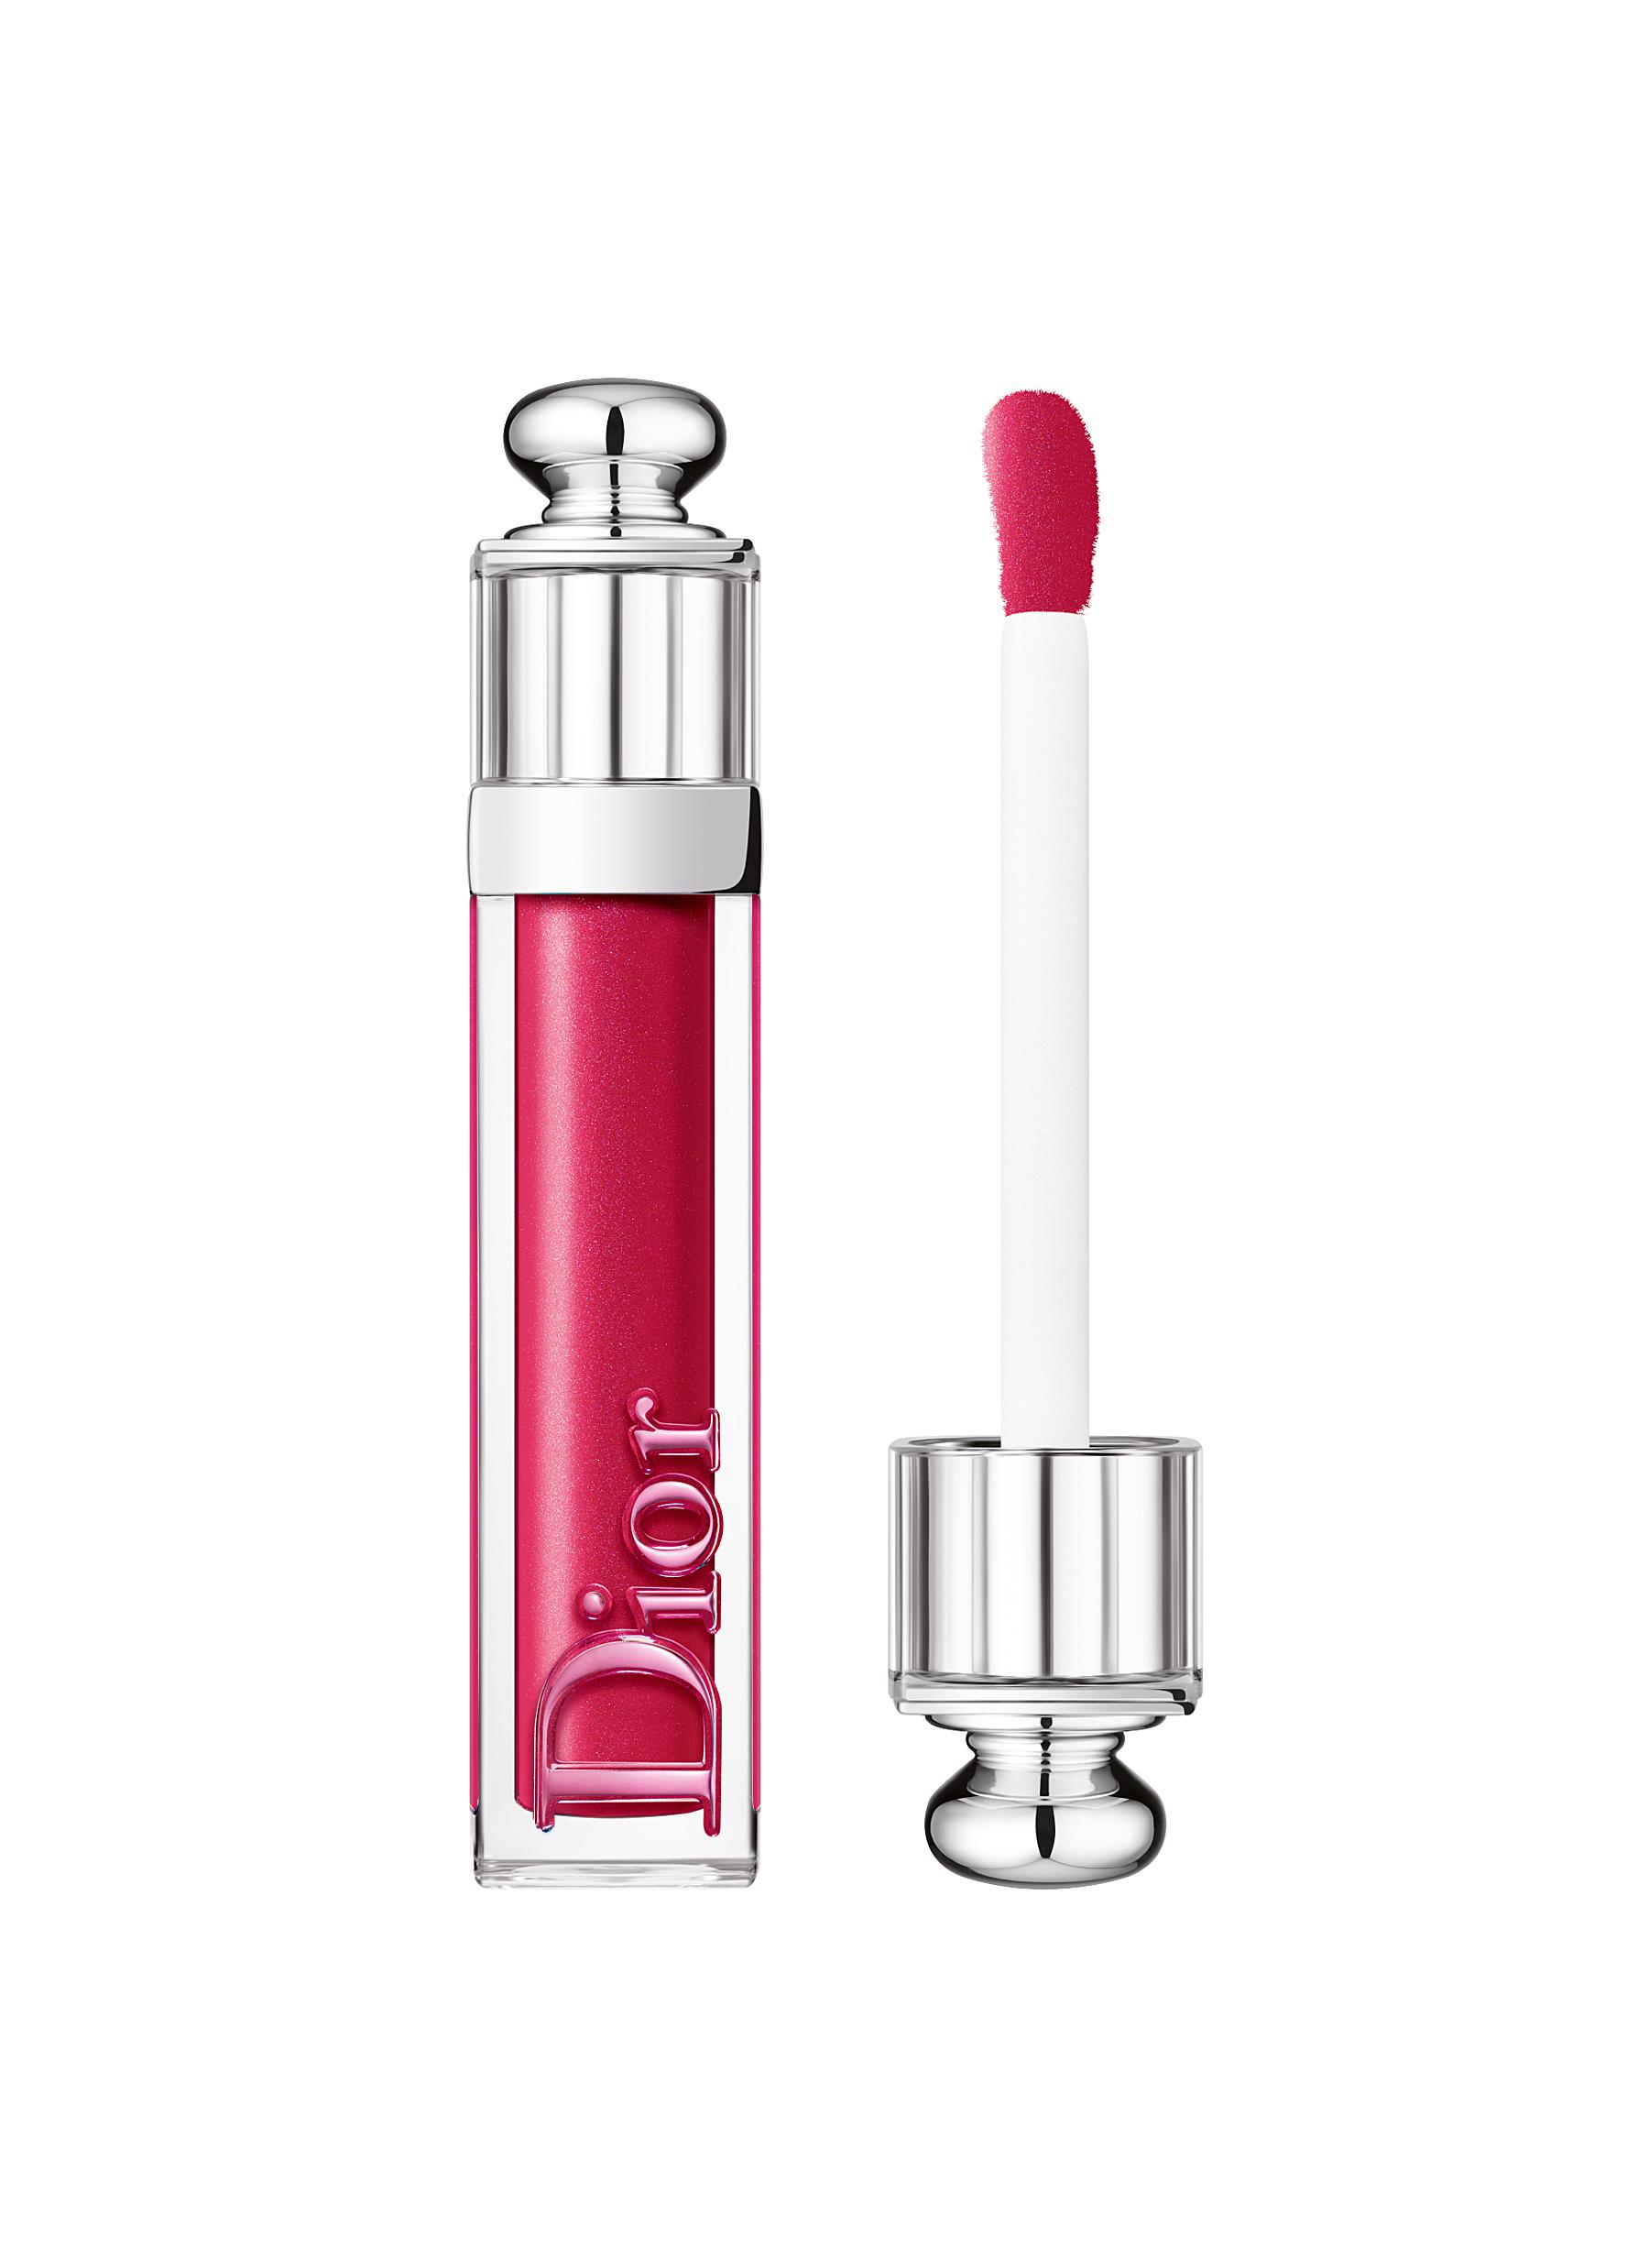 dior addict 976 lipstick